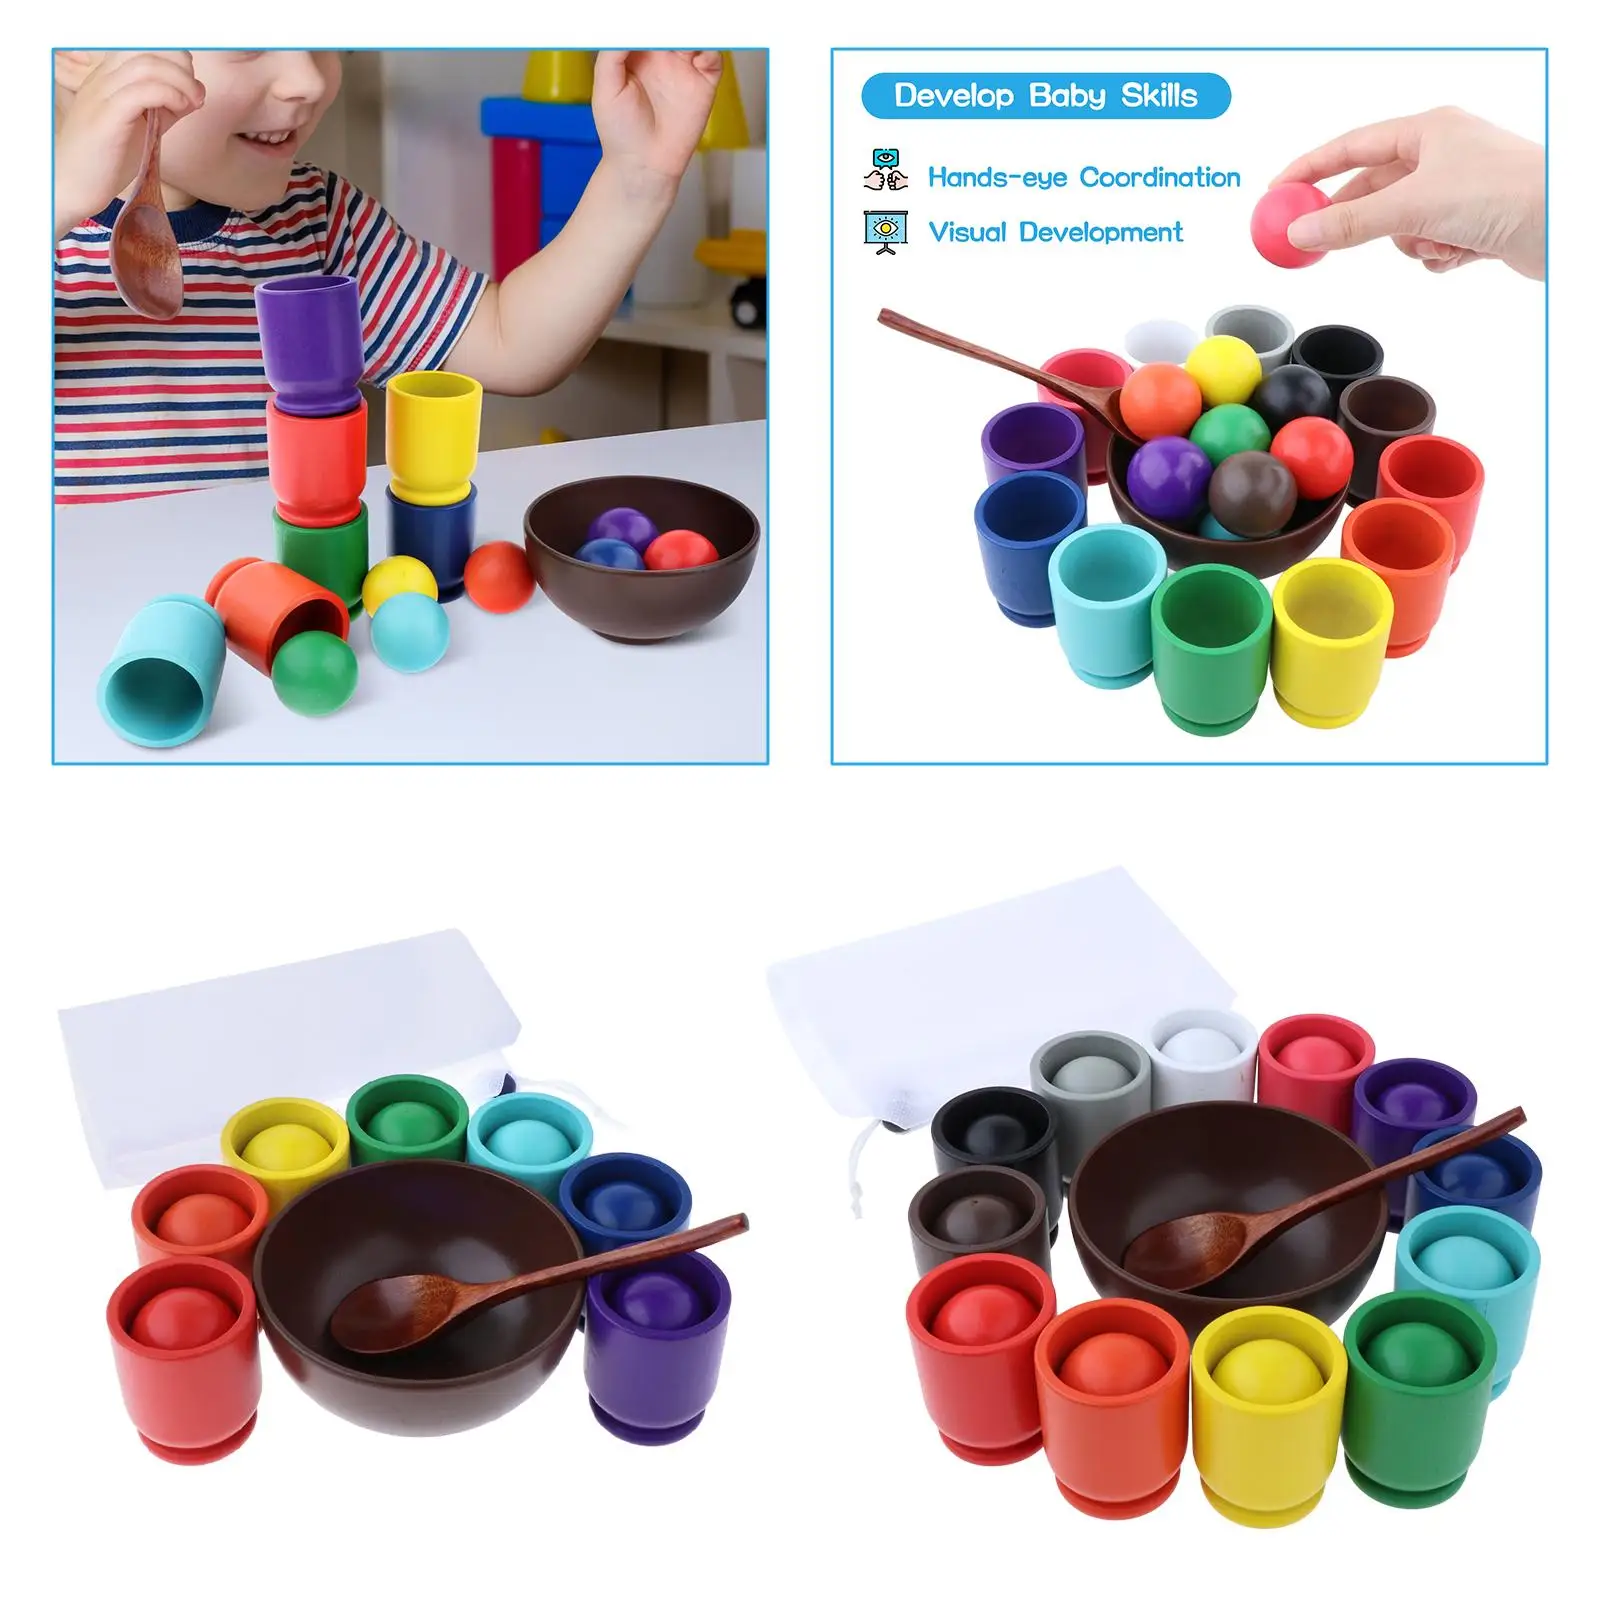 Children Rainbow Balls in Cups Montessori Toy, Wooden Sorter Game, Training Logical Thinking, Fine Motor Development for Kids